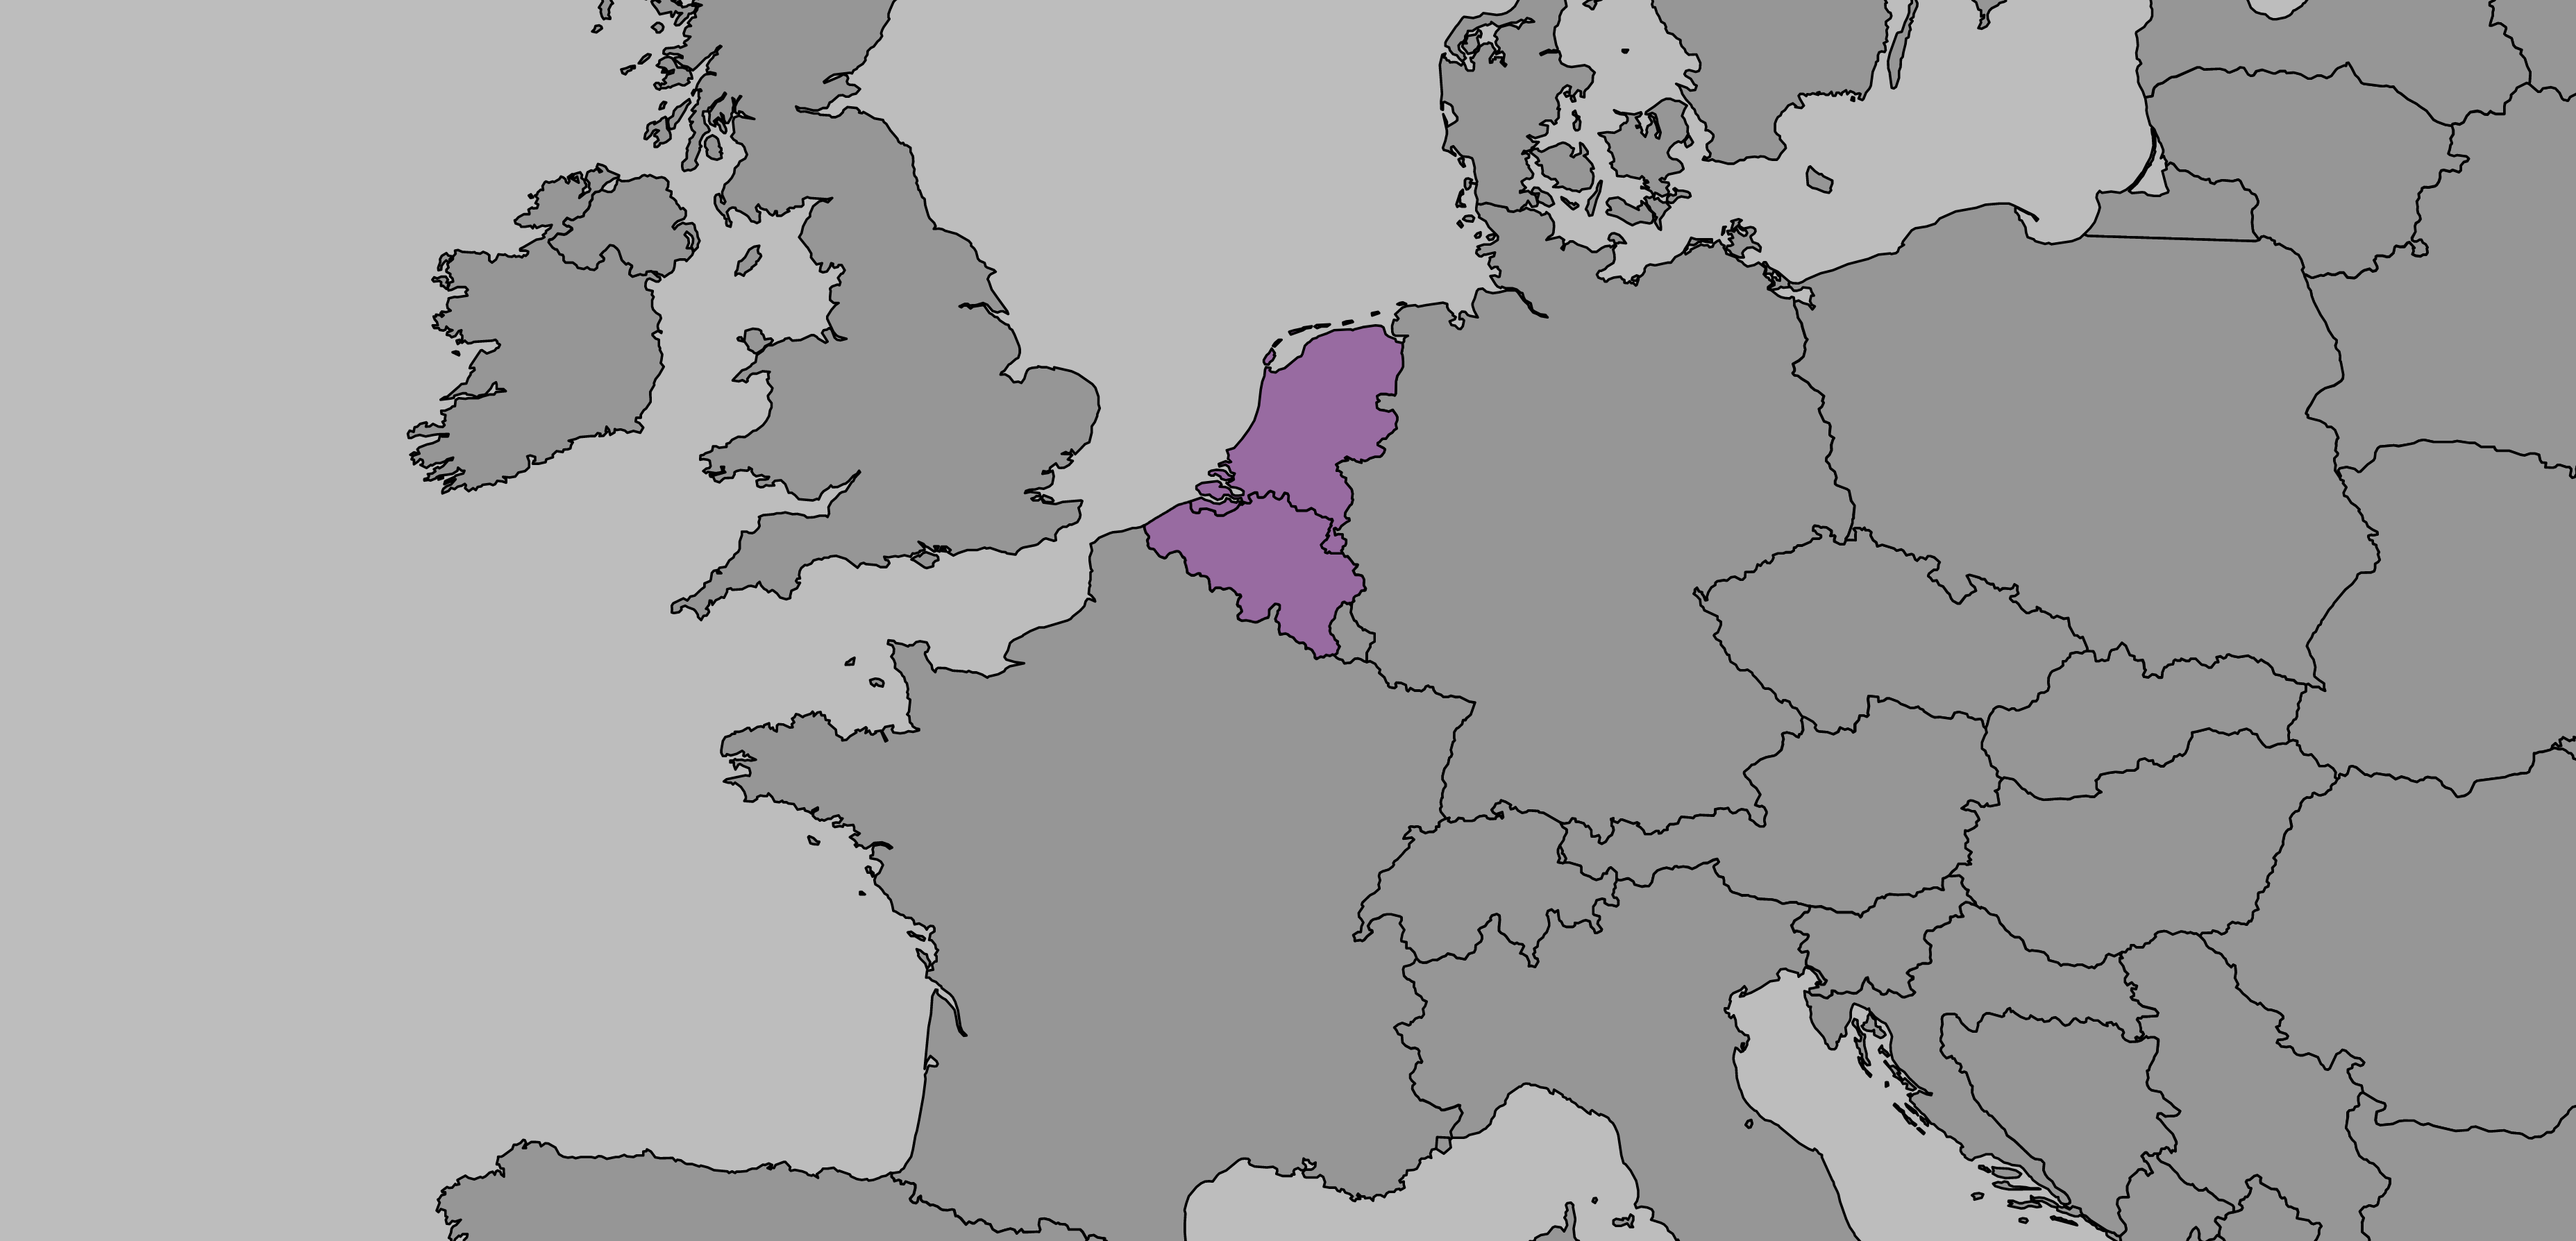 Netherlands (1864 - ?) Profile